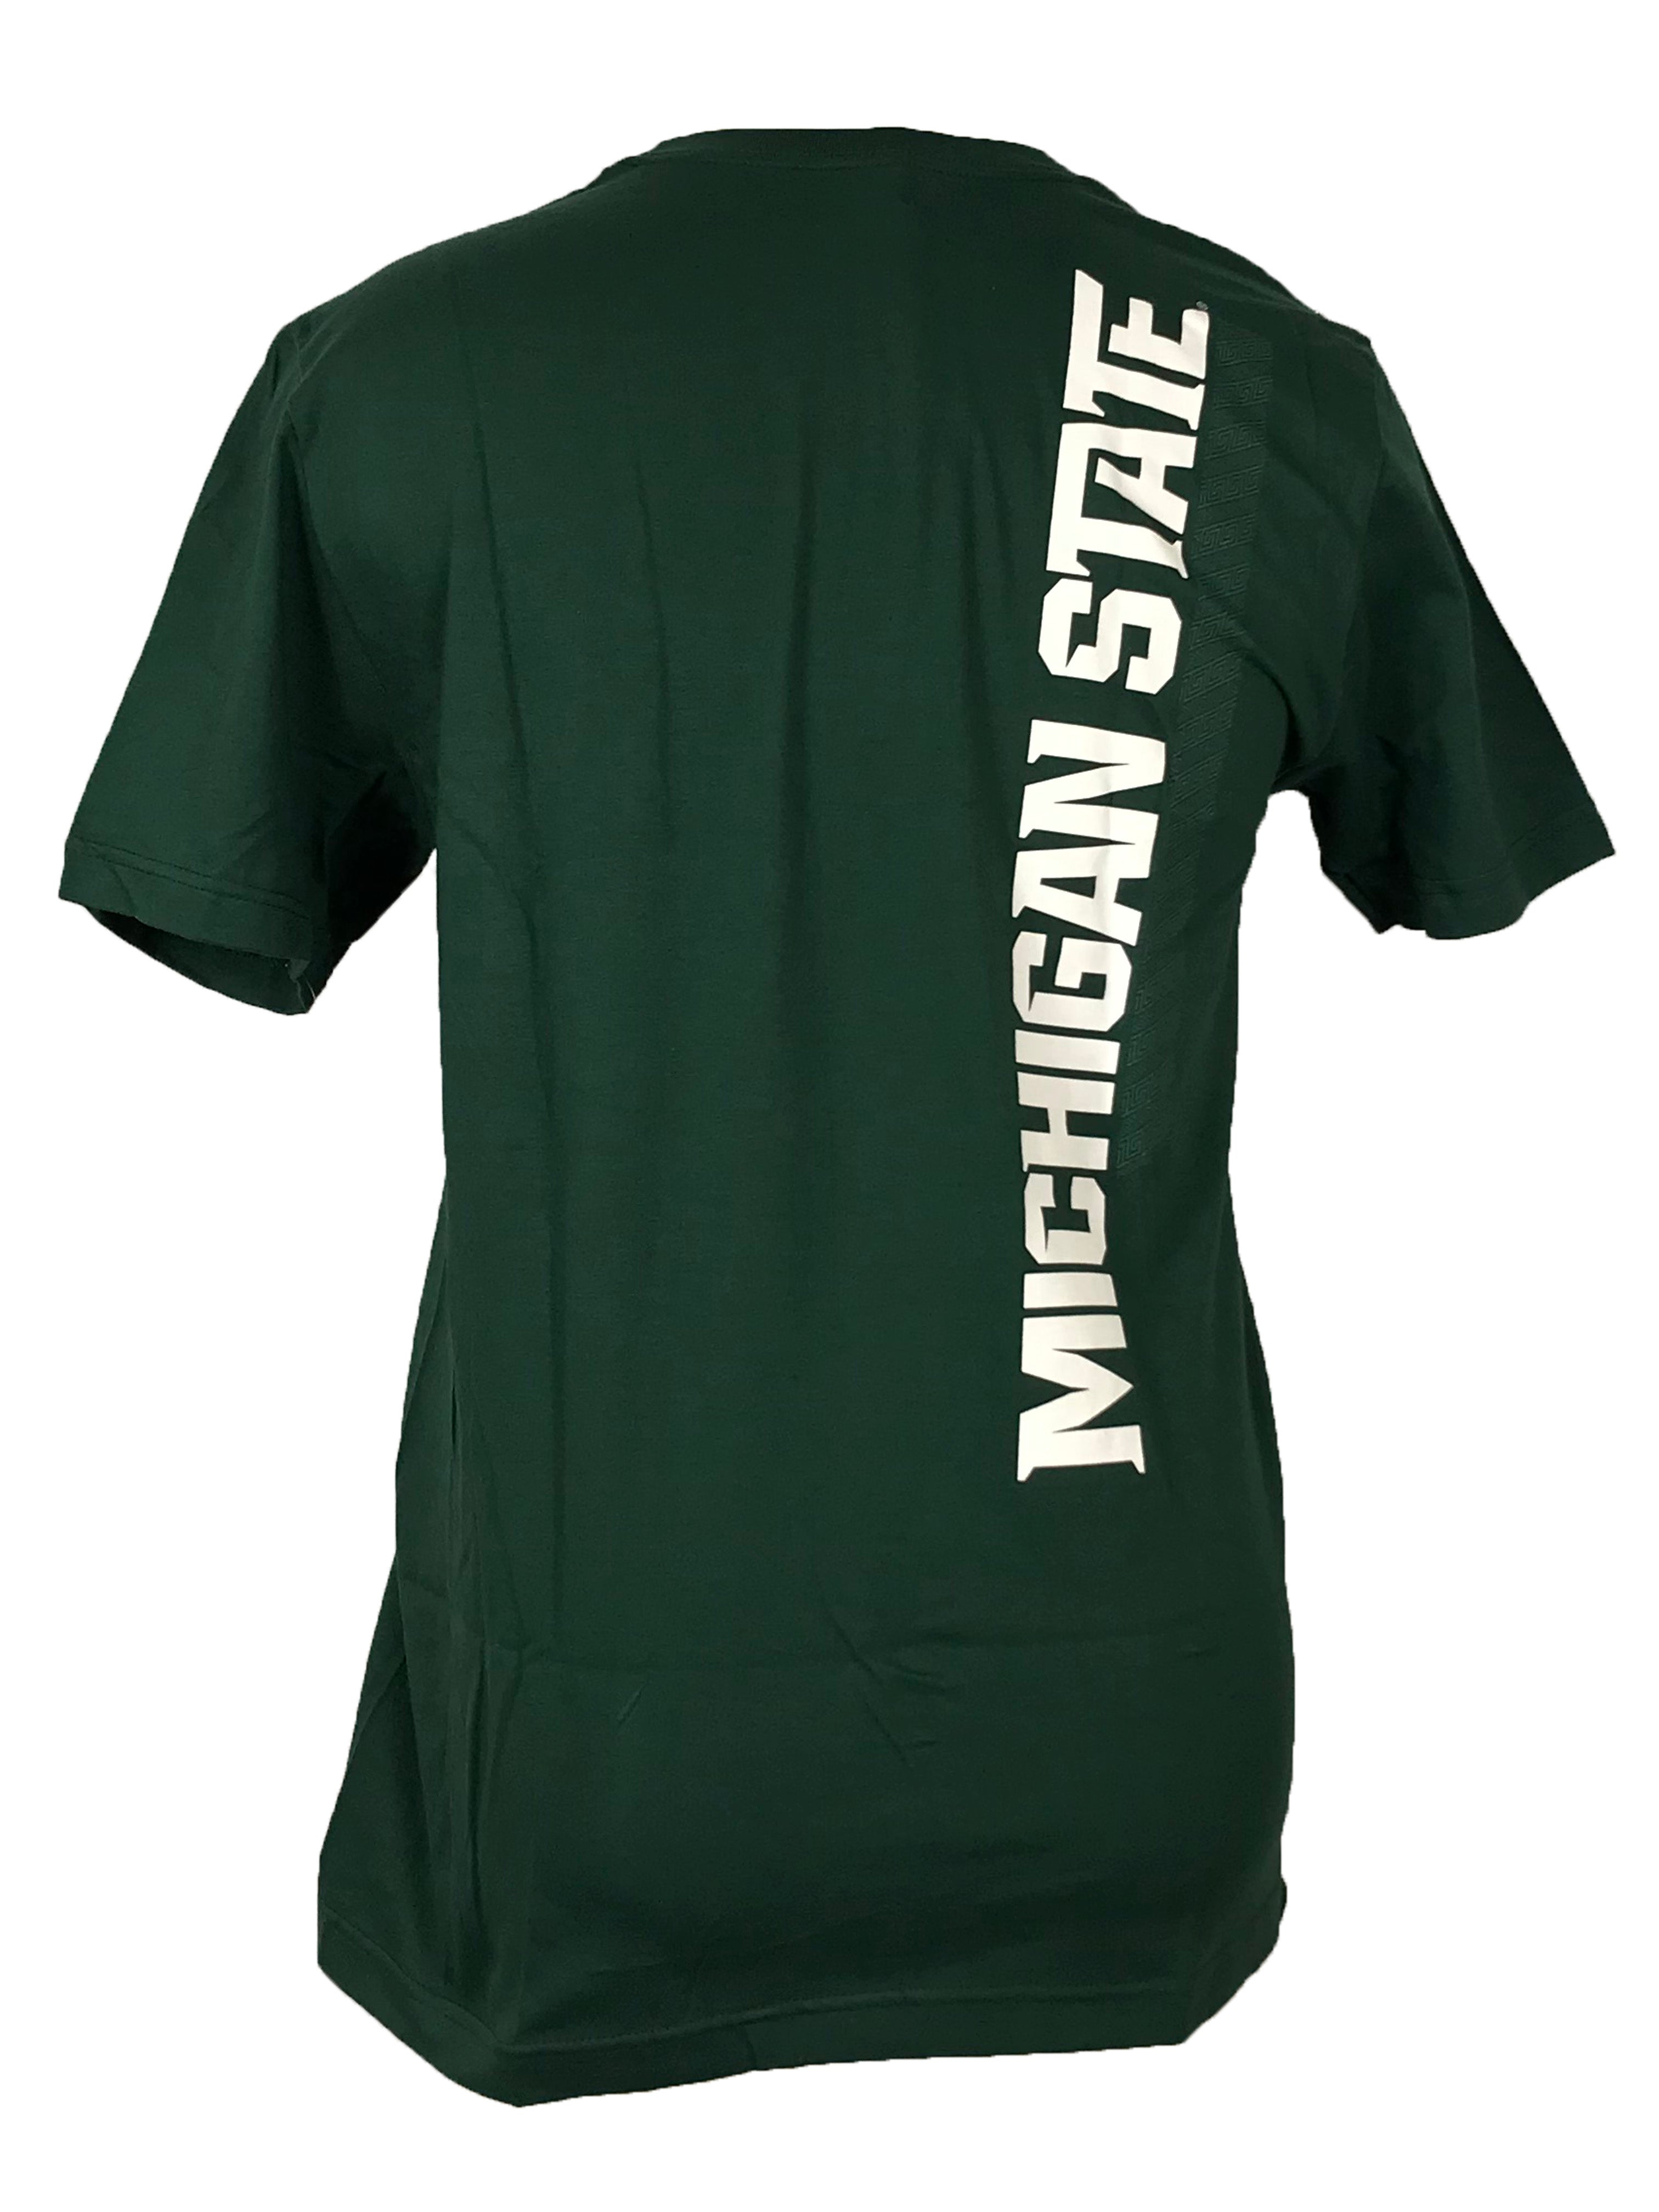 Nike Green Michigan State 2011 Football T-Shirt Men's Size M